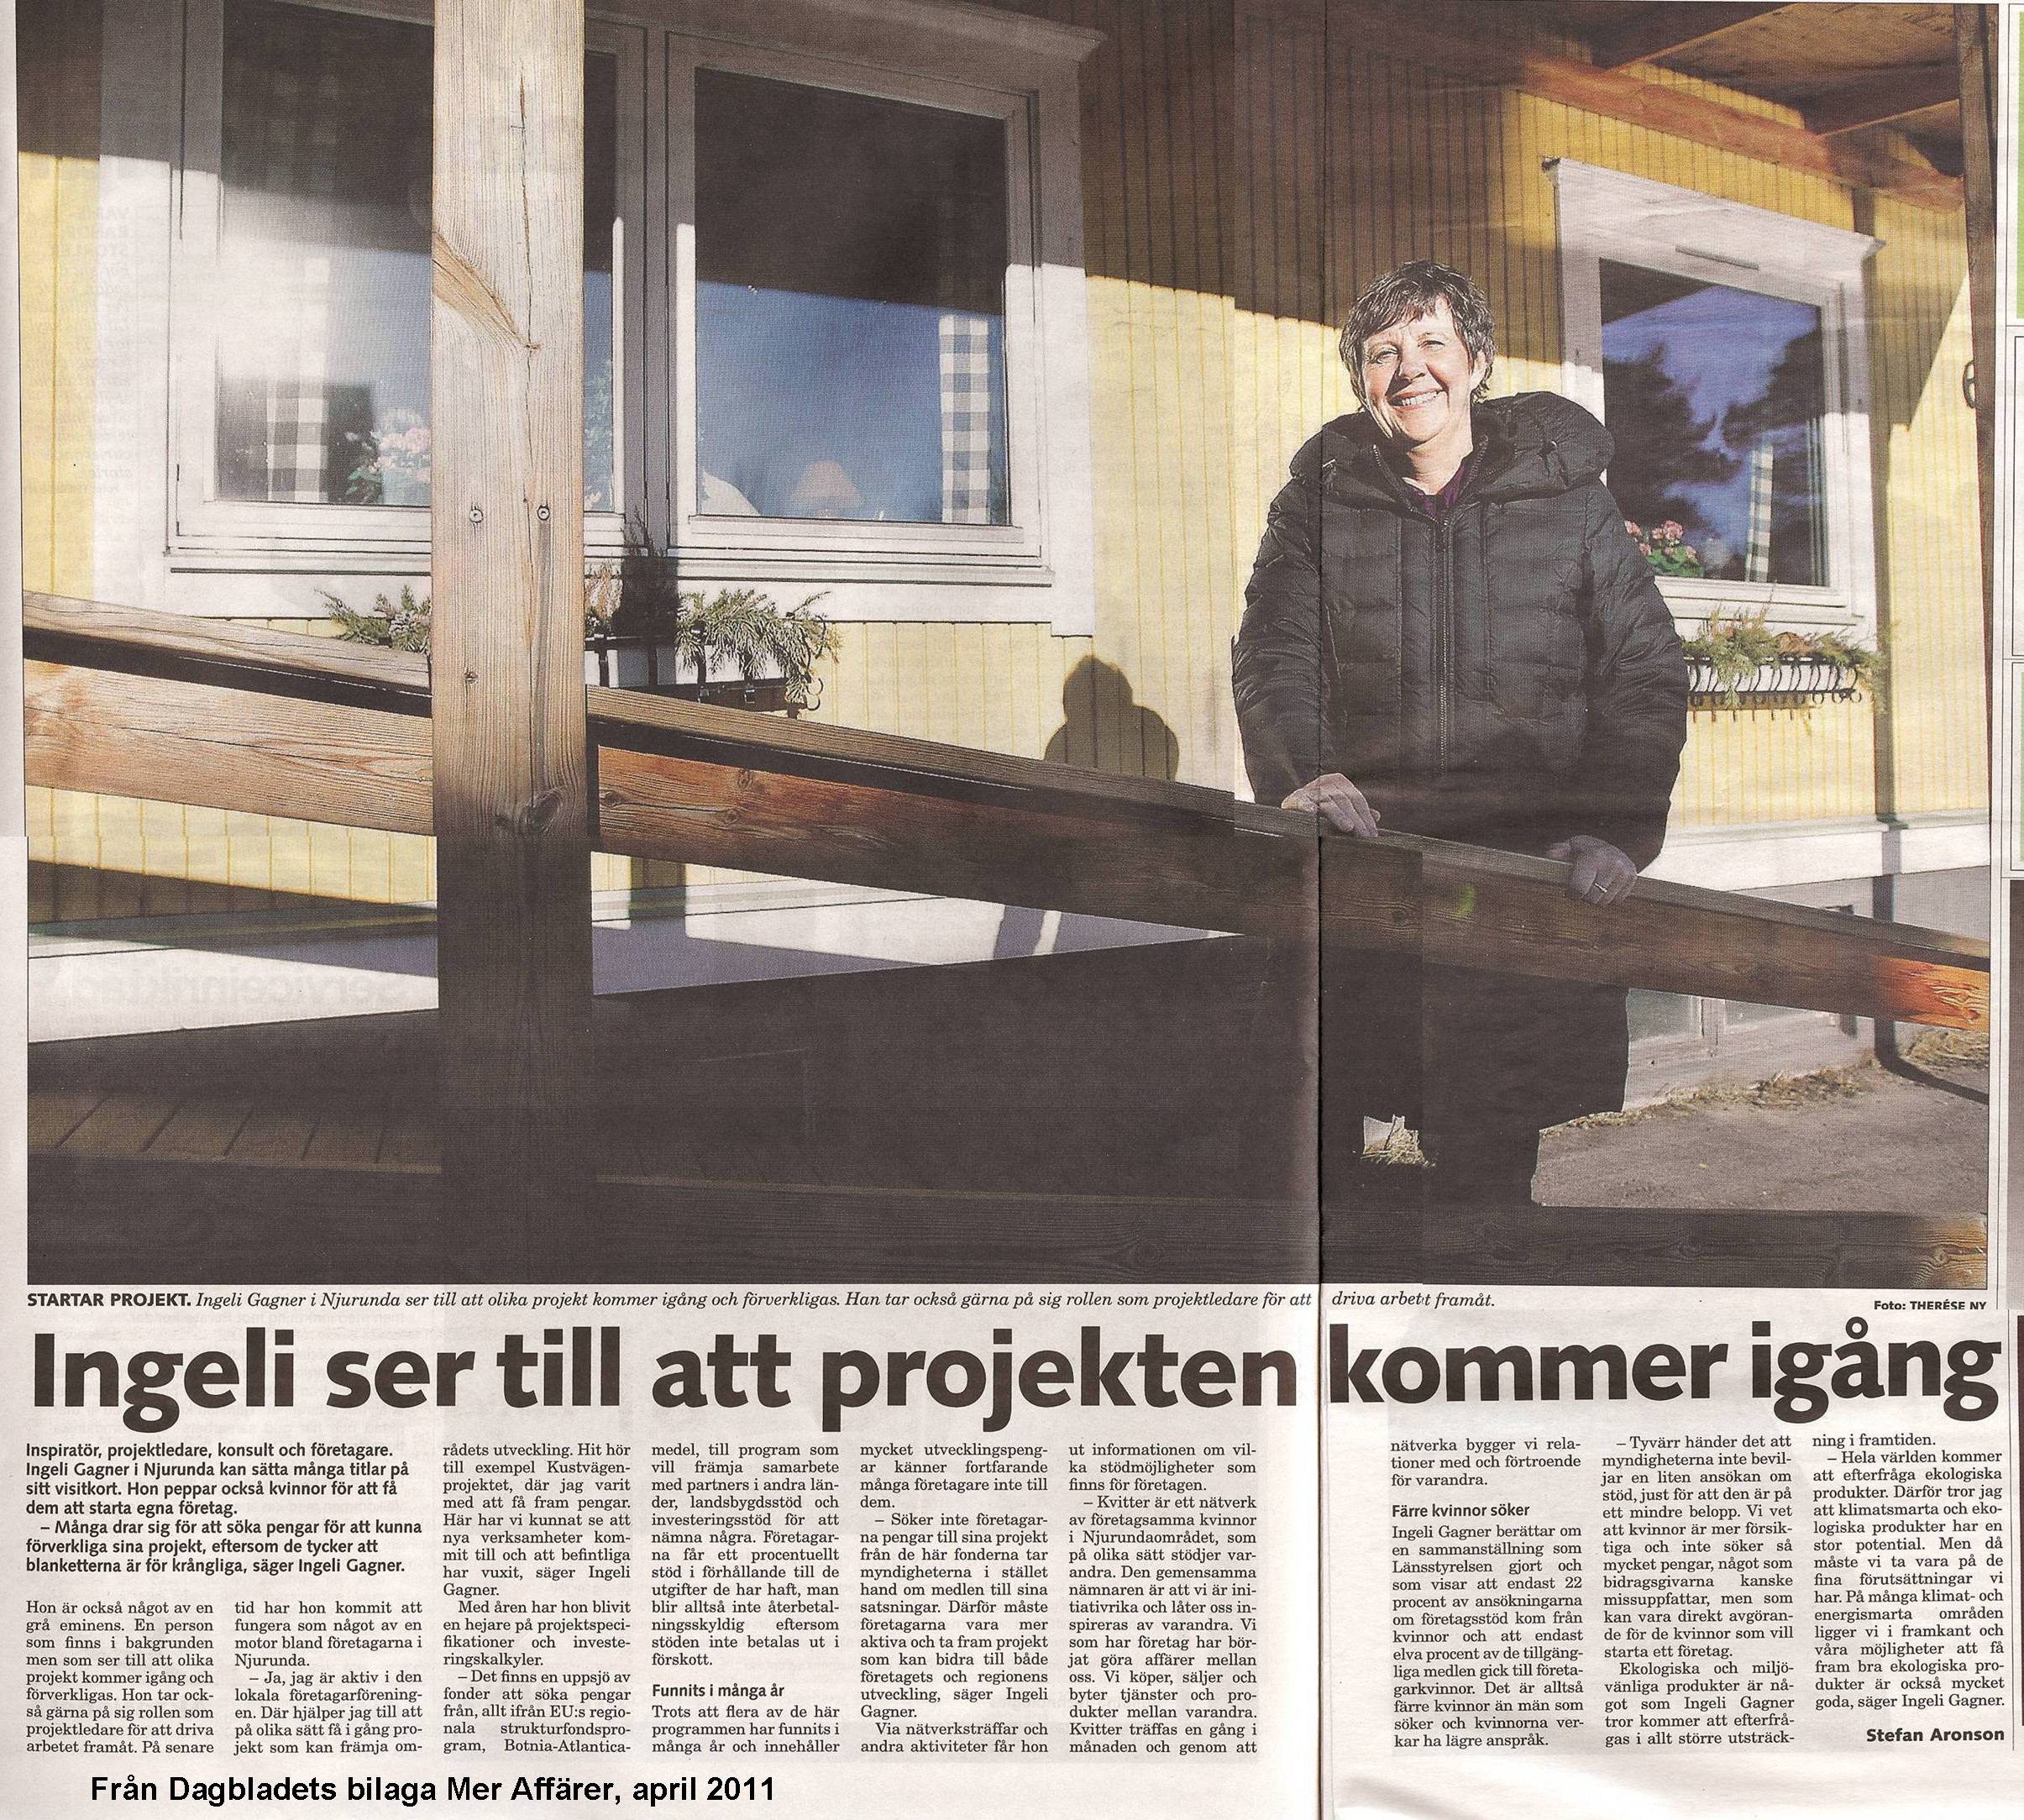 Ingeli Gagner, Framtidsporten i Dagbladets bilaga Nya Affärer april 2011